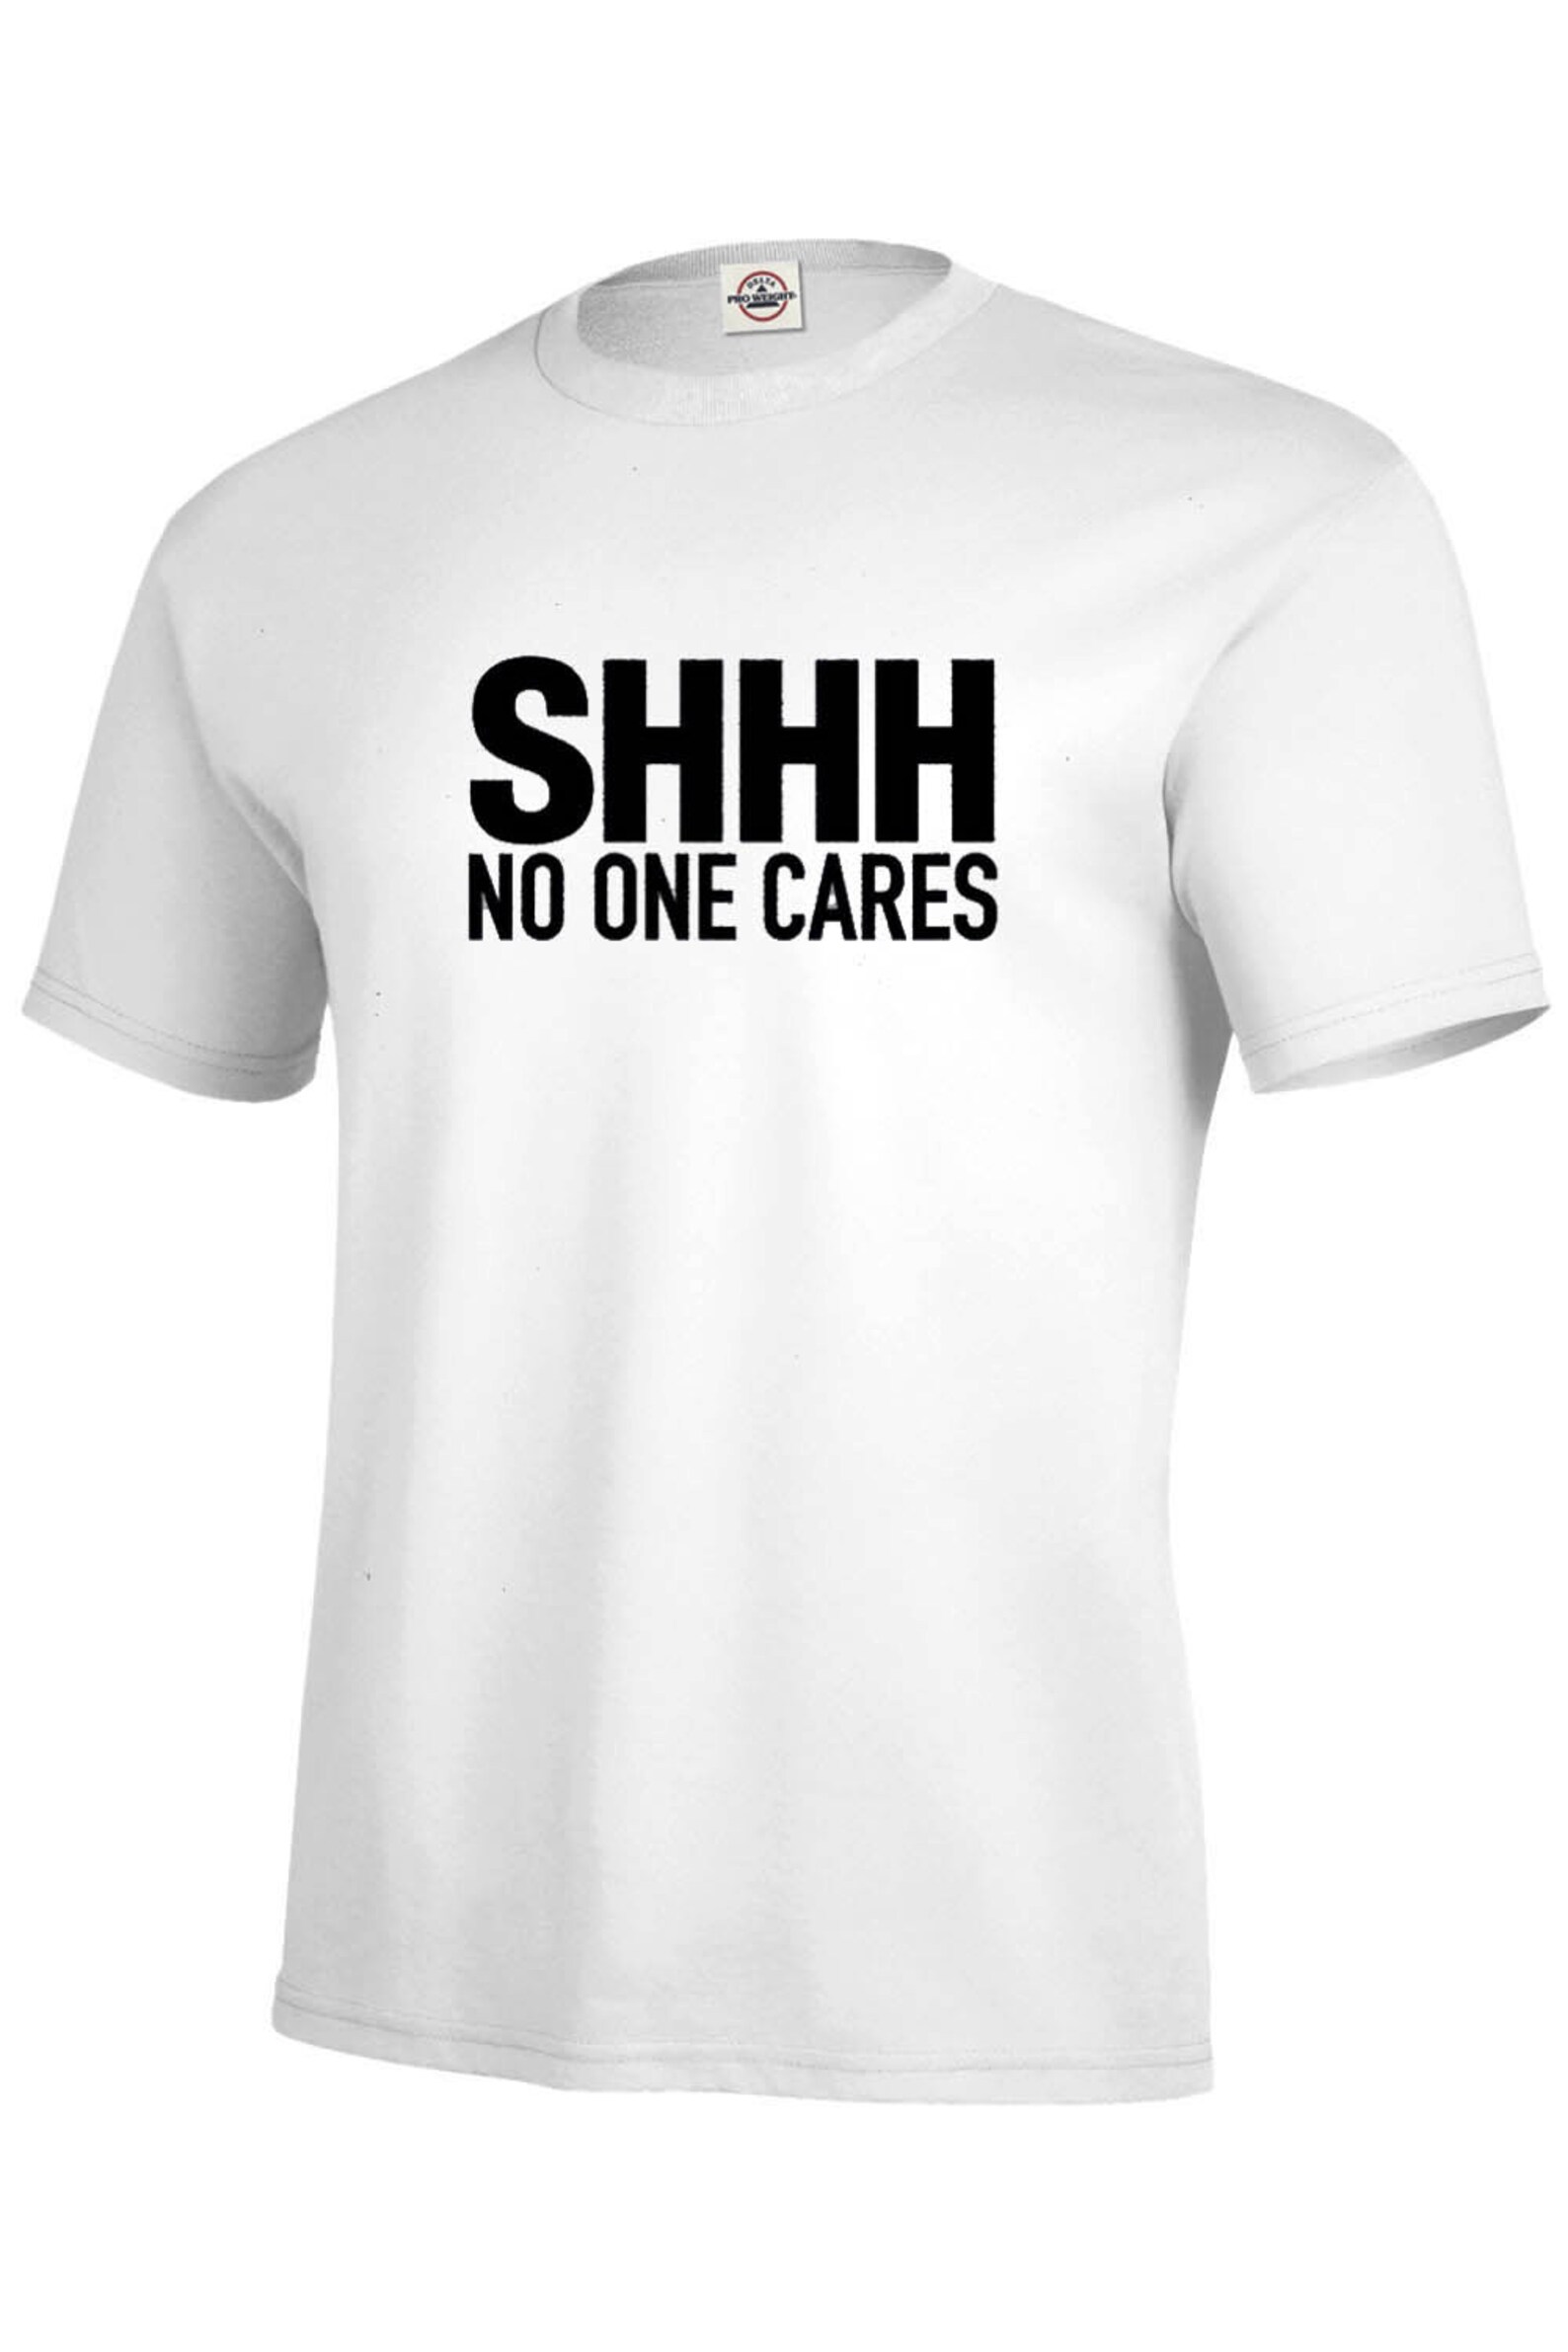 Shhhhh No One Cares Funny T-shirt/long Sleeve Men's Sizes - Etsy